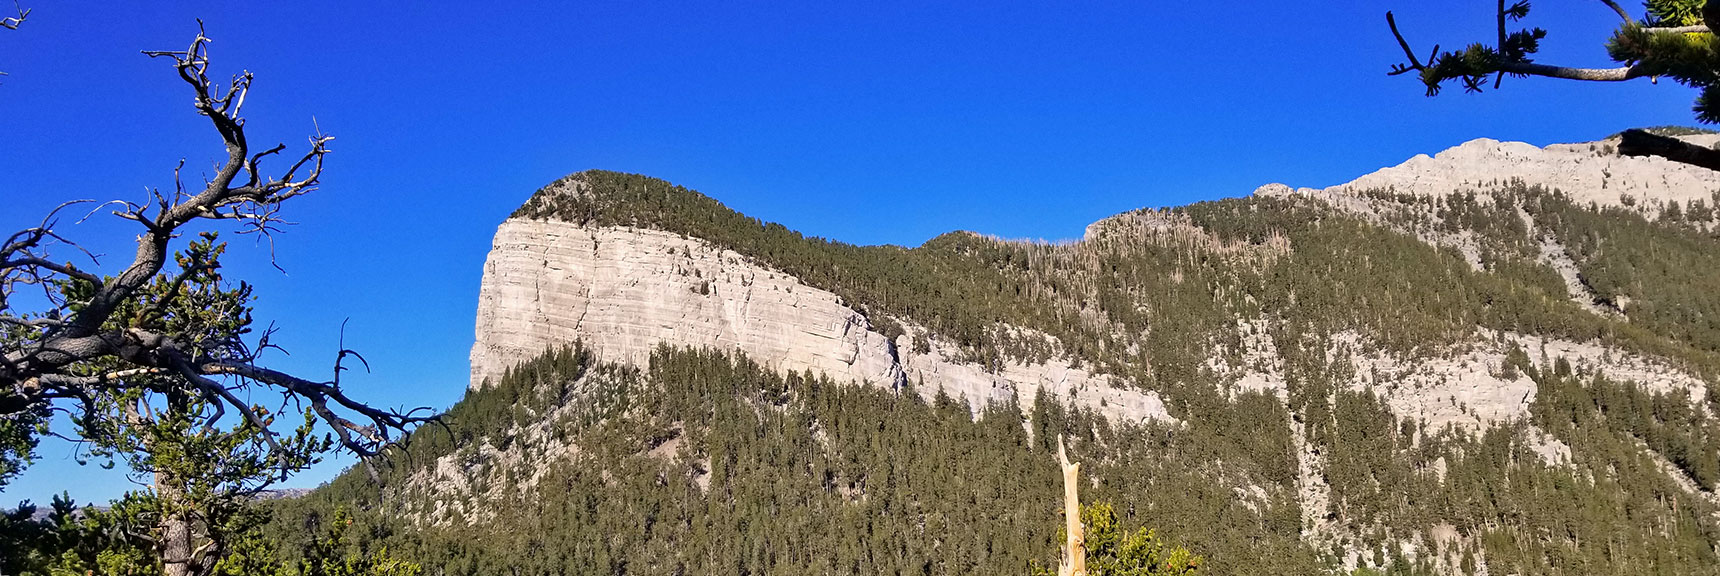 View from High Ridge on North Loop Trail, Mummy Mountain's Toe, Mt. Charleston Wilderness, Nevada